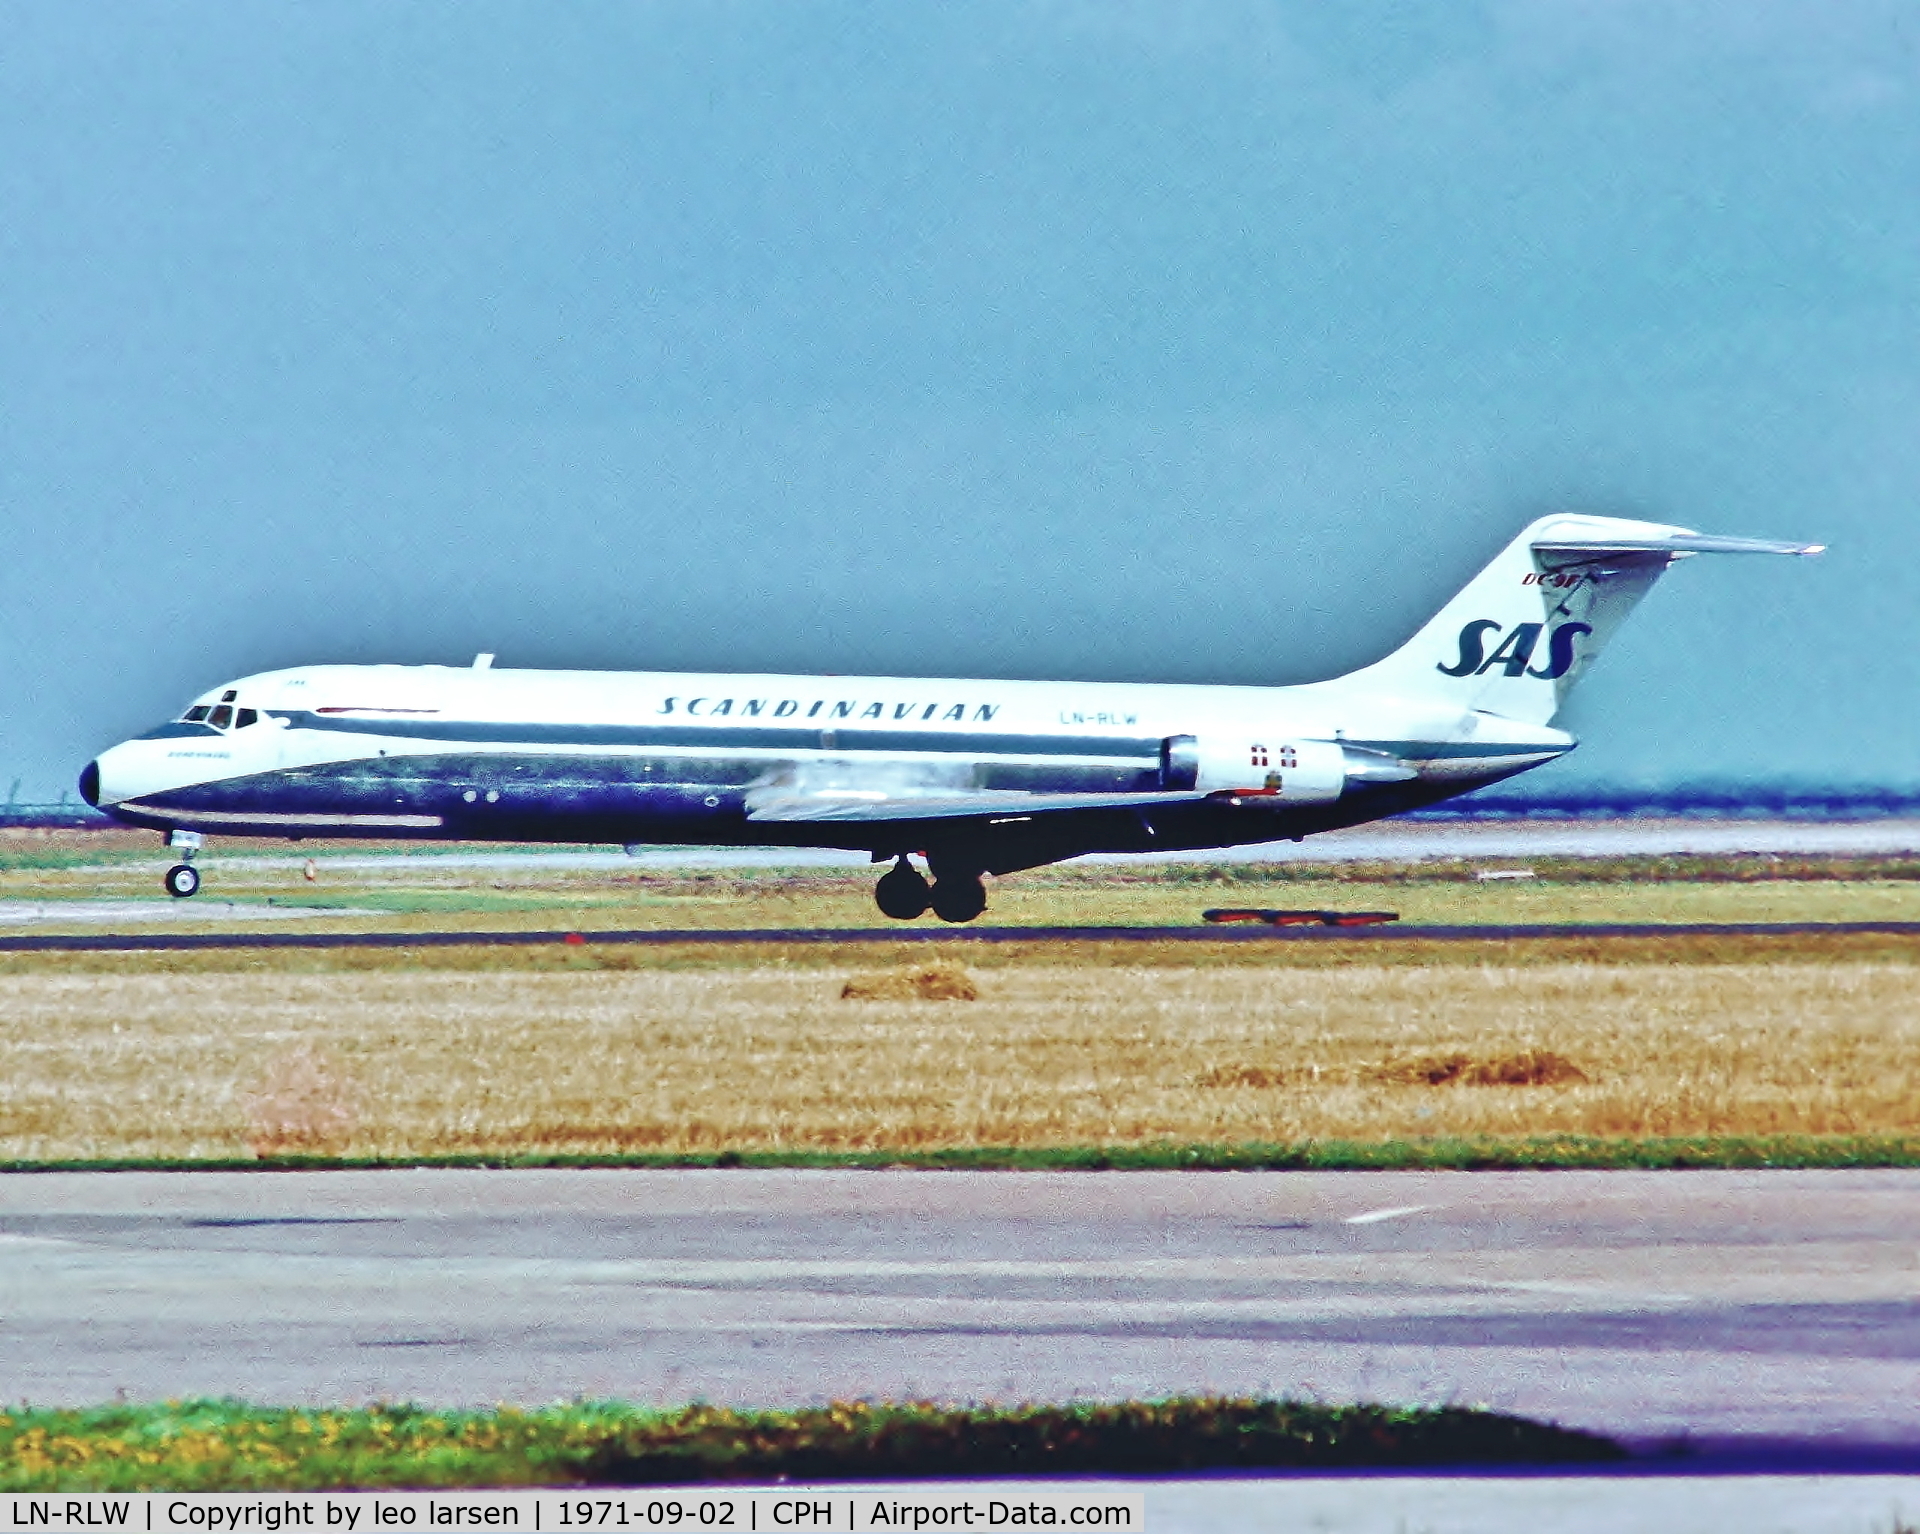 LN-RLW, 1969 Douglas DC-9-33AF C/N 47414, Copenhagen 2.9.1971 landing R-30